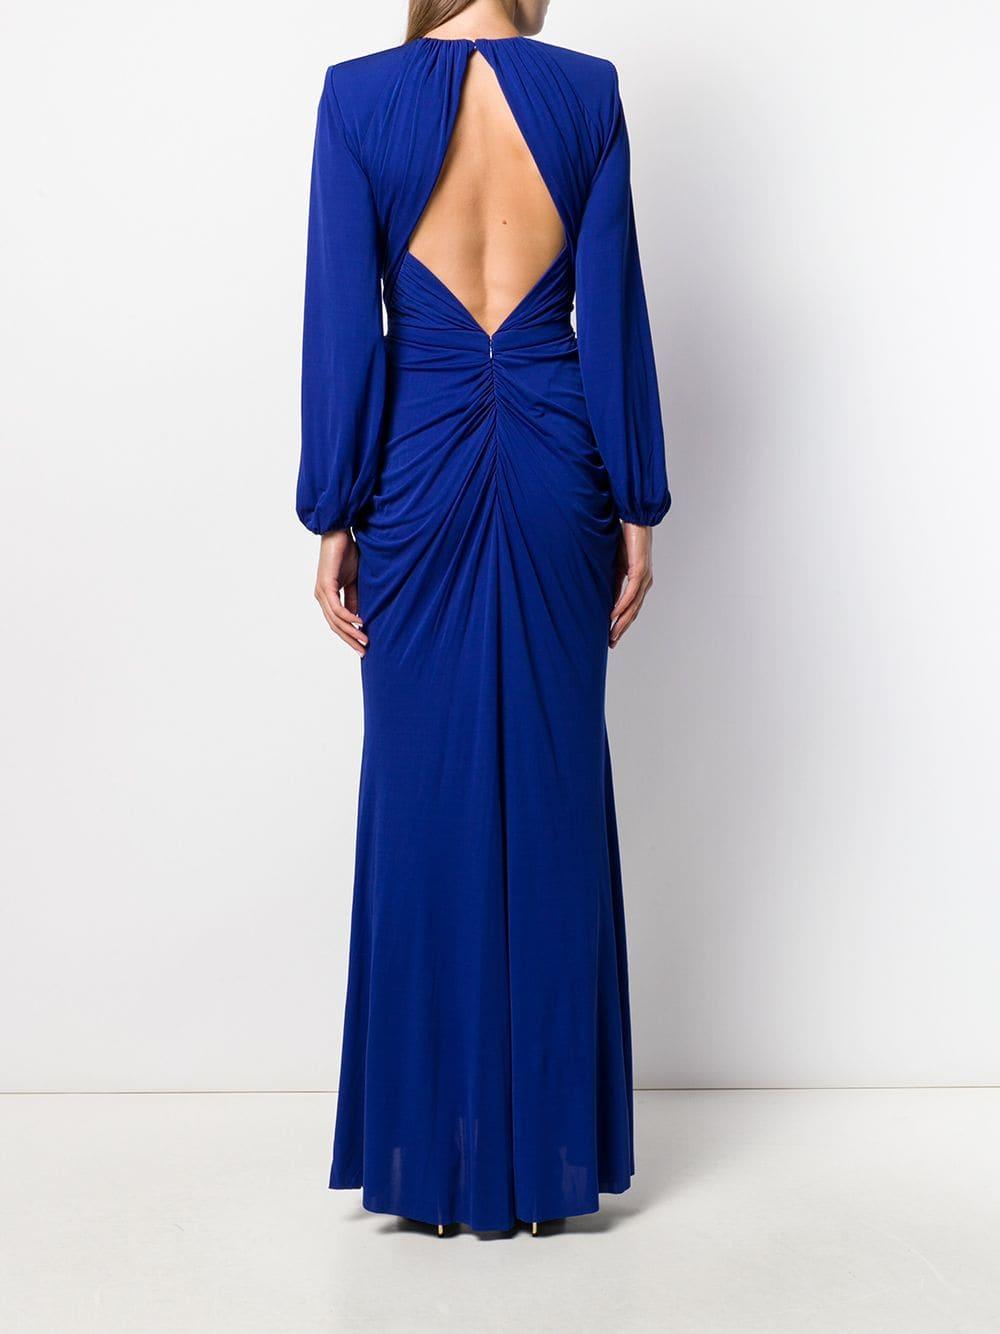 Alexander McQueen Gathered Front Evening Dress in Blue - Lyst